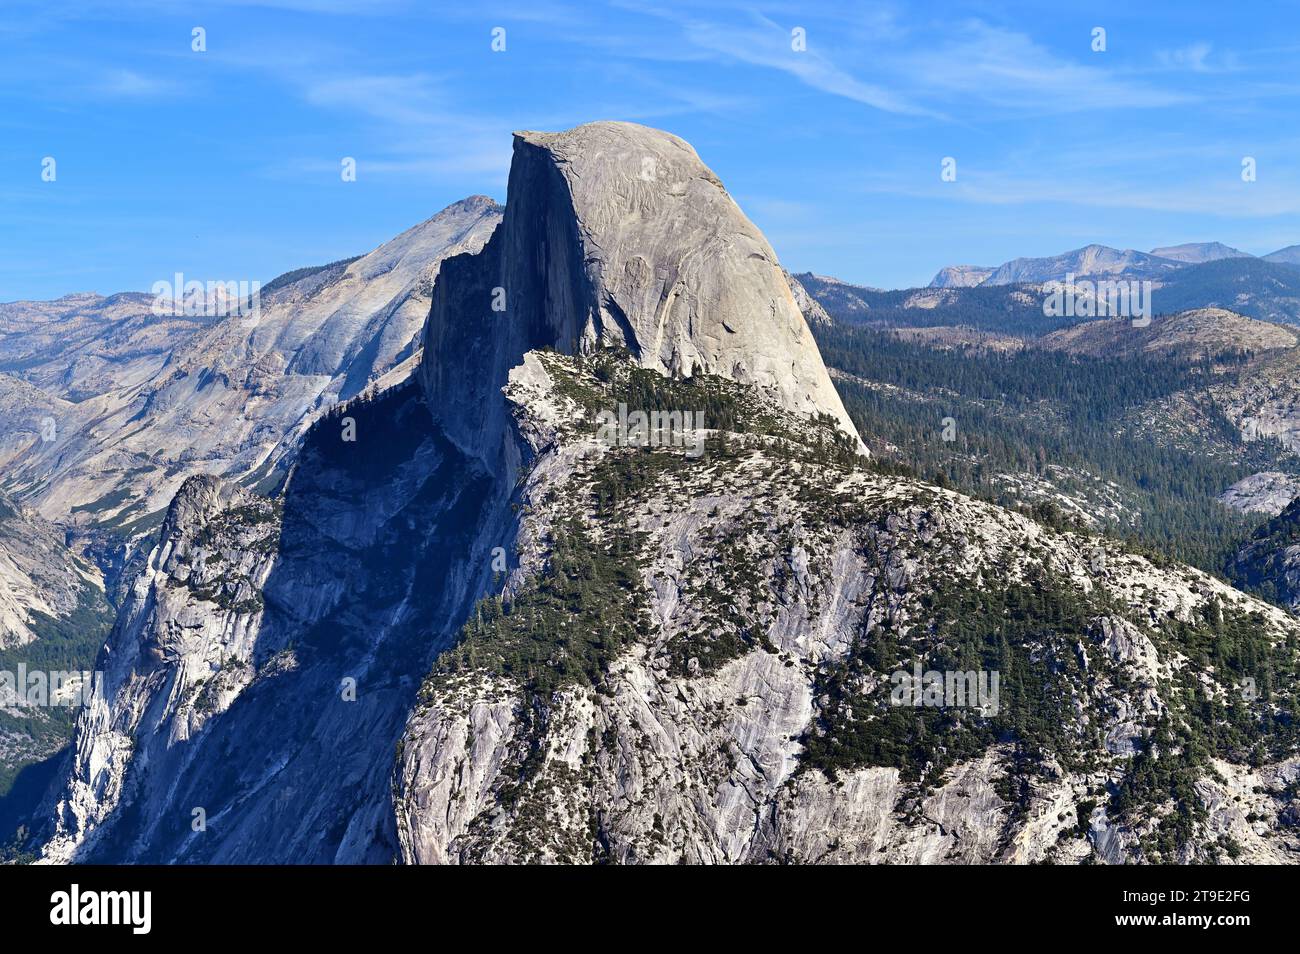 Yosemite National Park, California, USA. Yosemite's famed Half Dome peak as seen from Glacier Point. Stock Photo